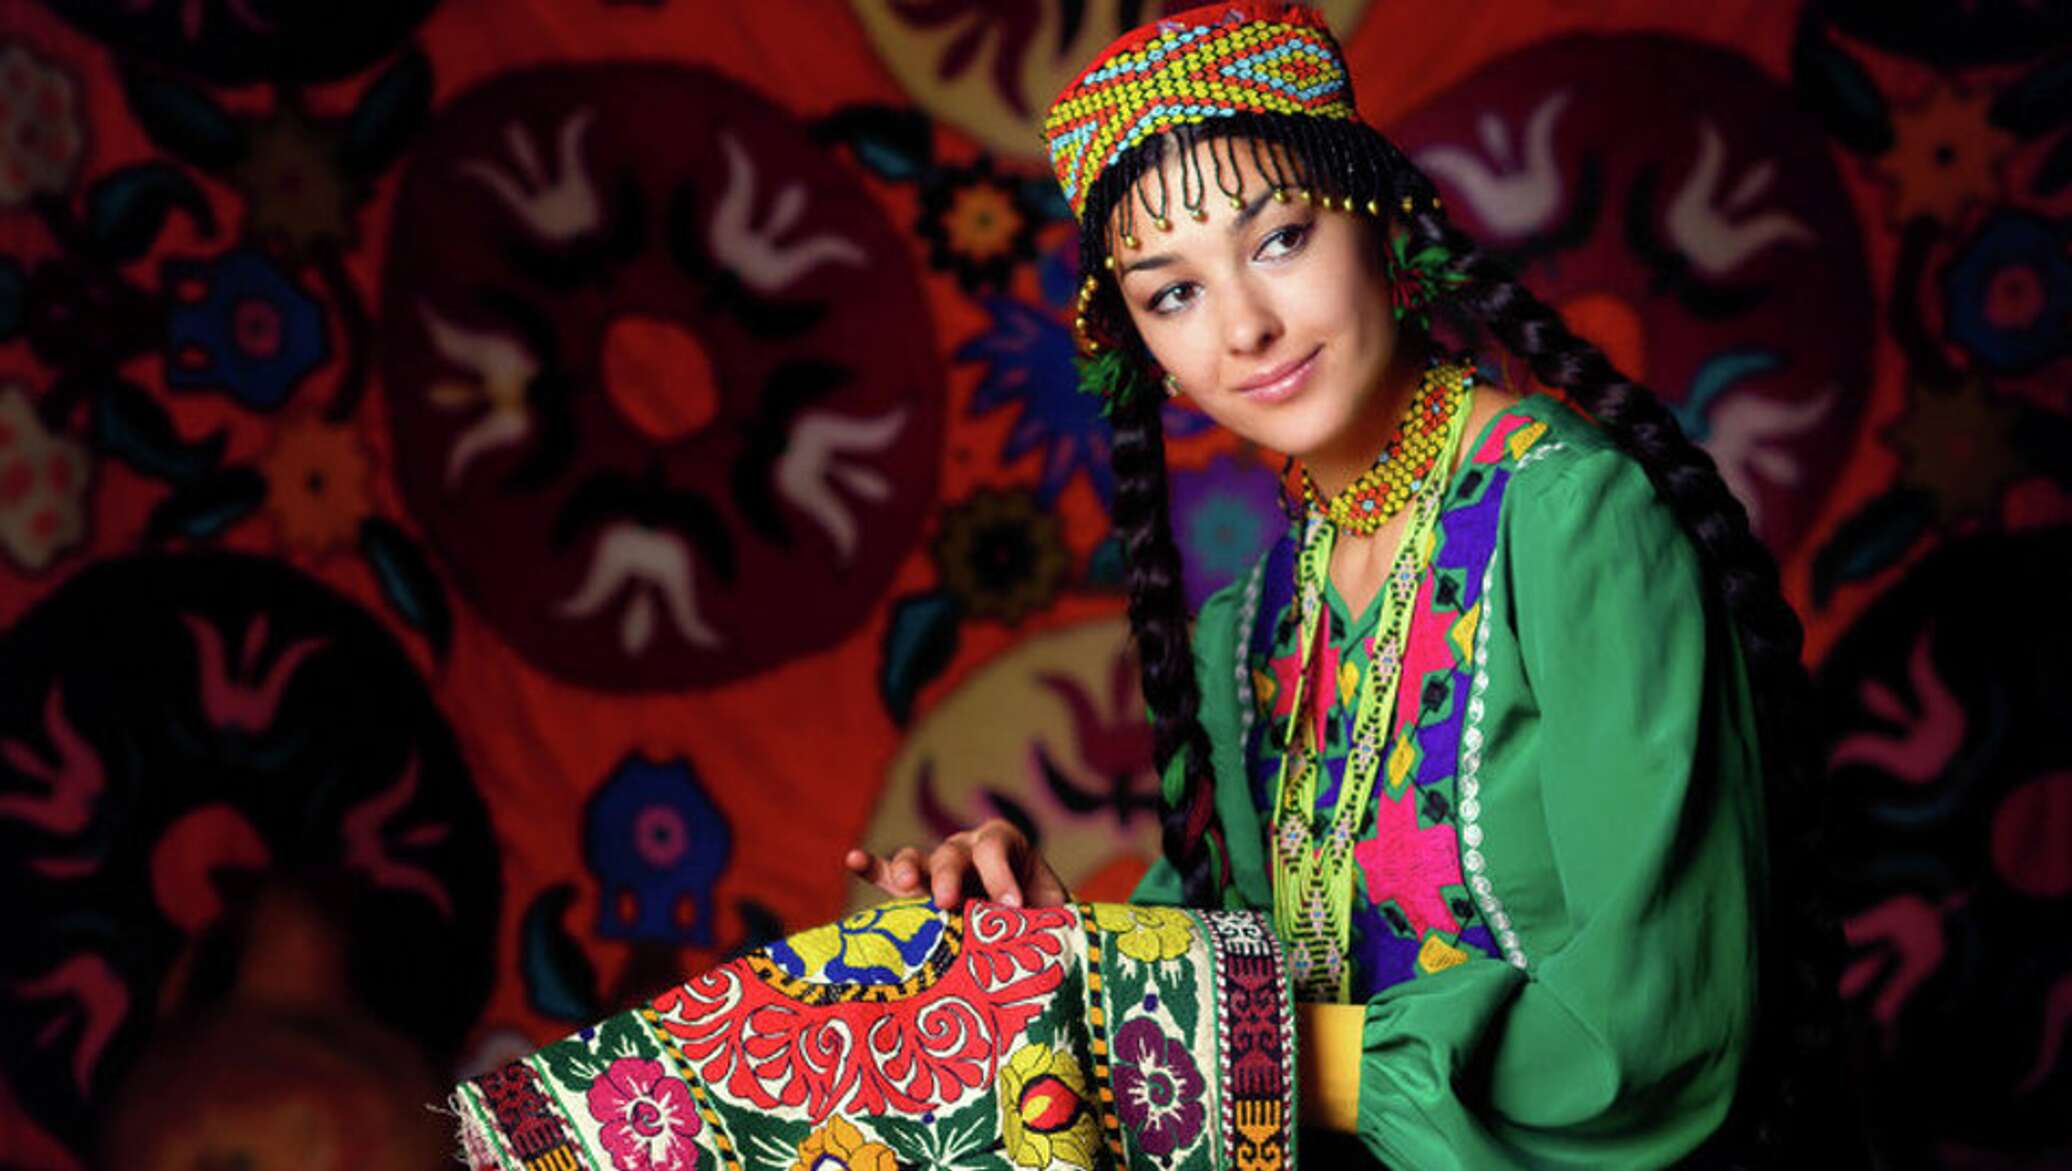 Таджикски виде. Культура Таджикистана. Узбечка. Национальная одежда Таджикистана. Узбечки в национальной одежде.